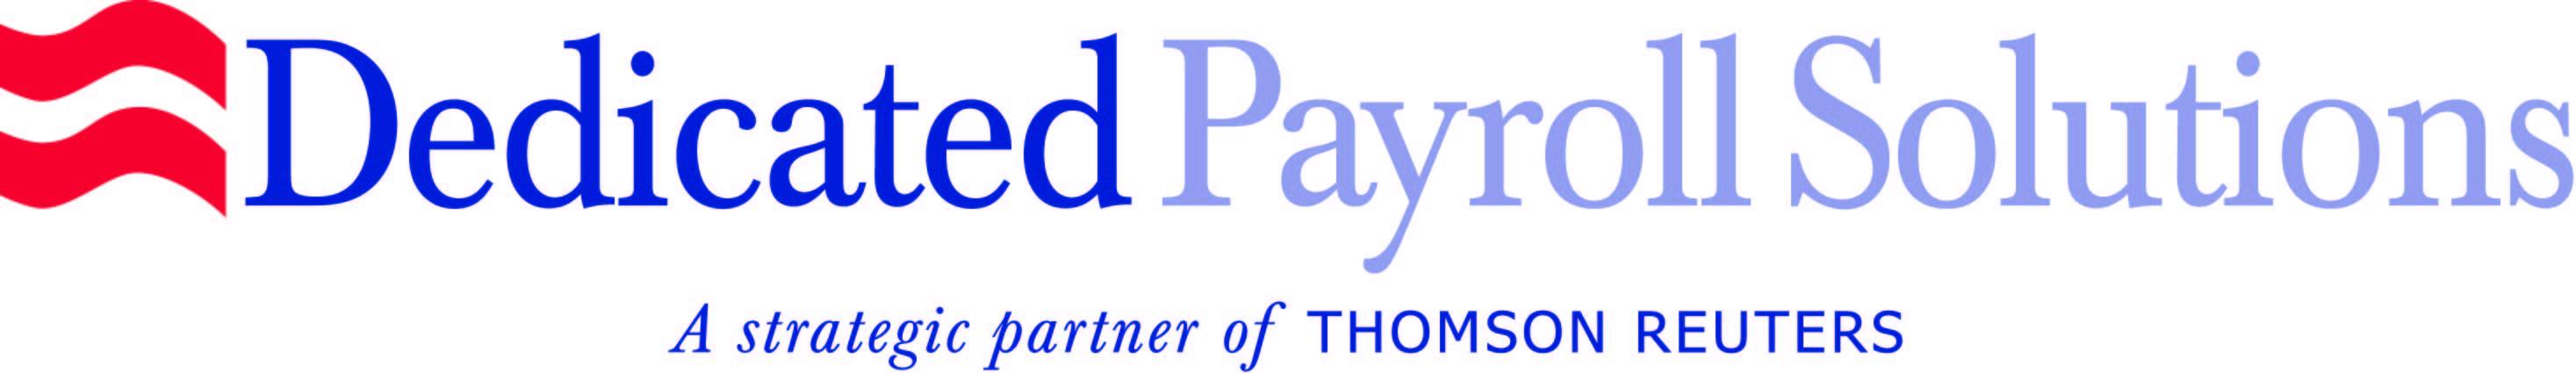 Dedicated Payroll Solutions 259 Thames St # 6, Bristol Rhode Island 02809